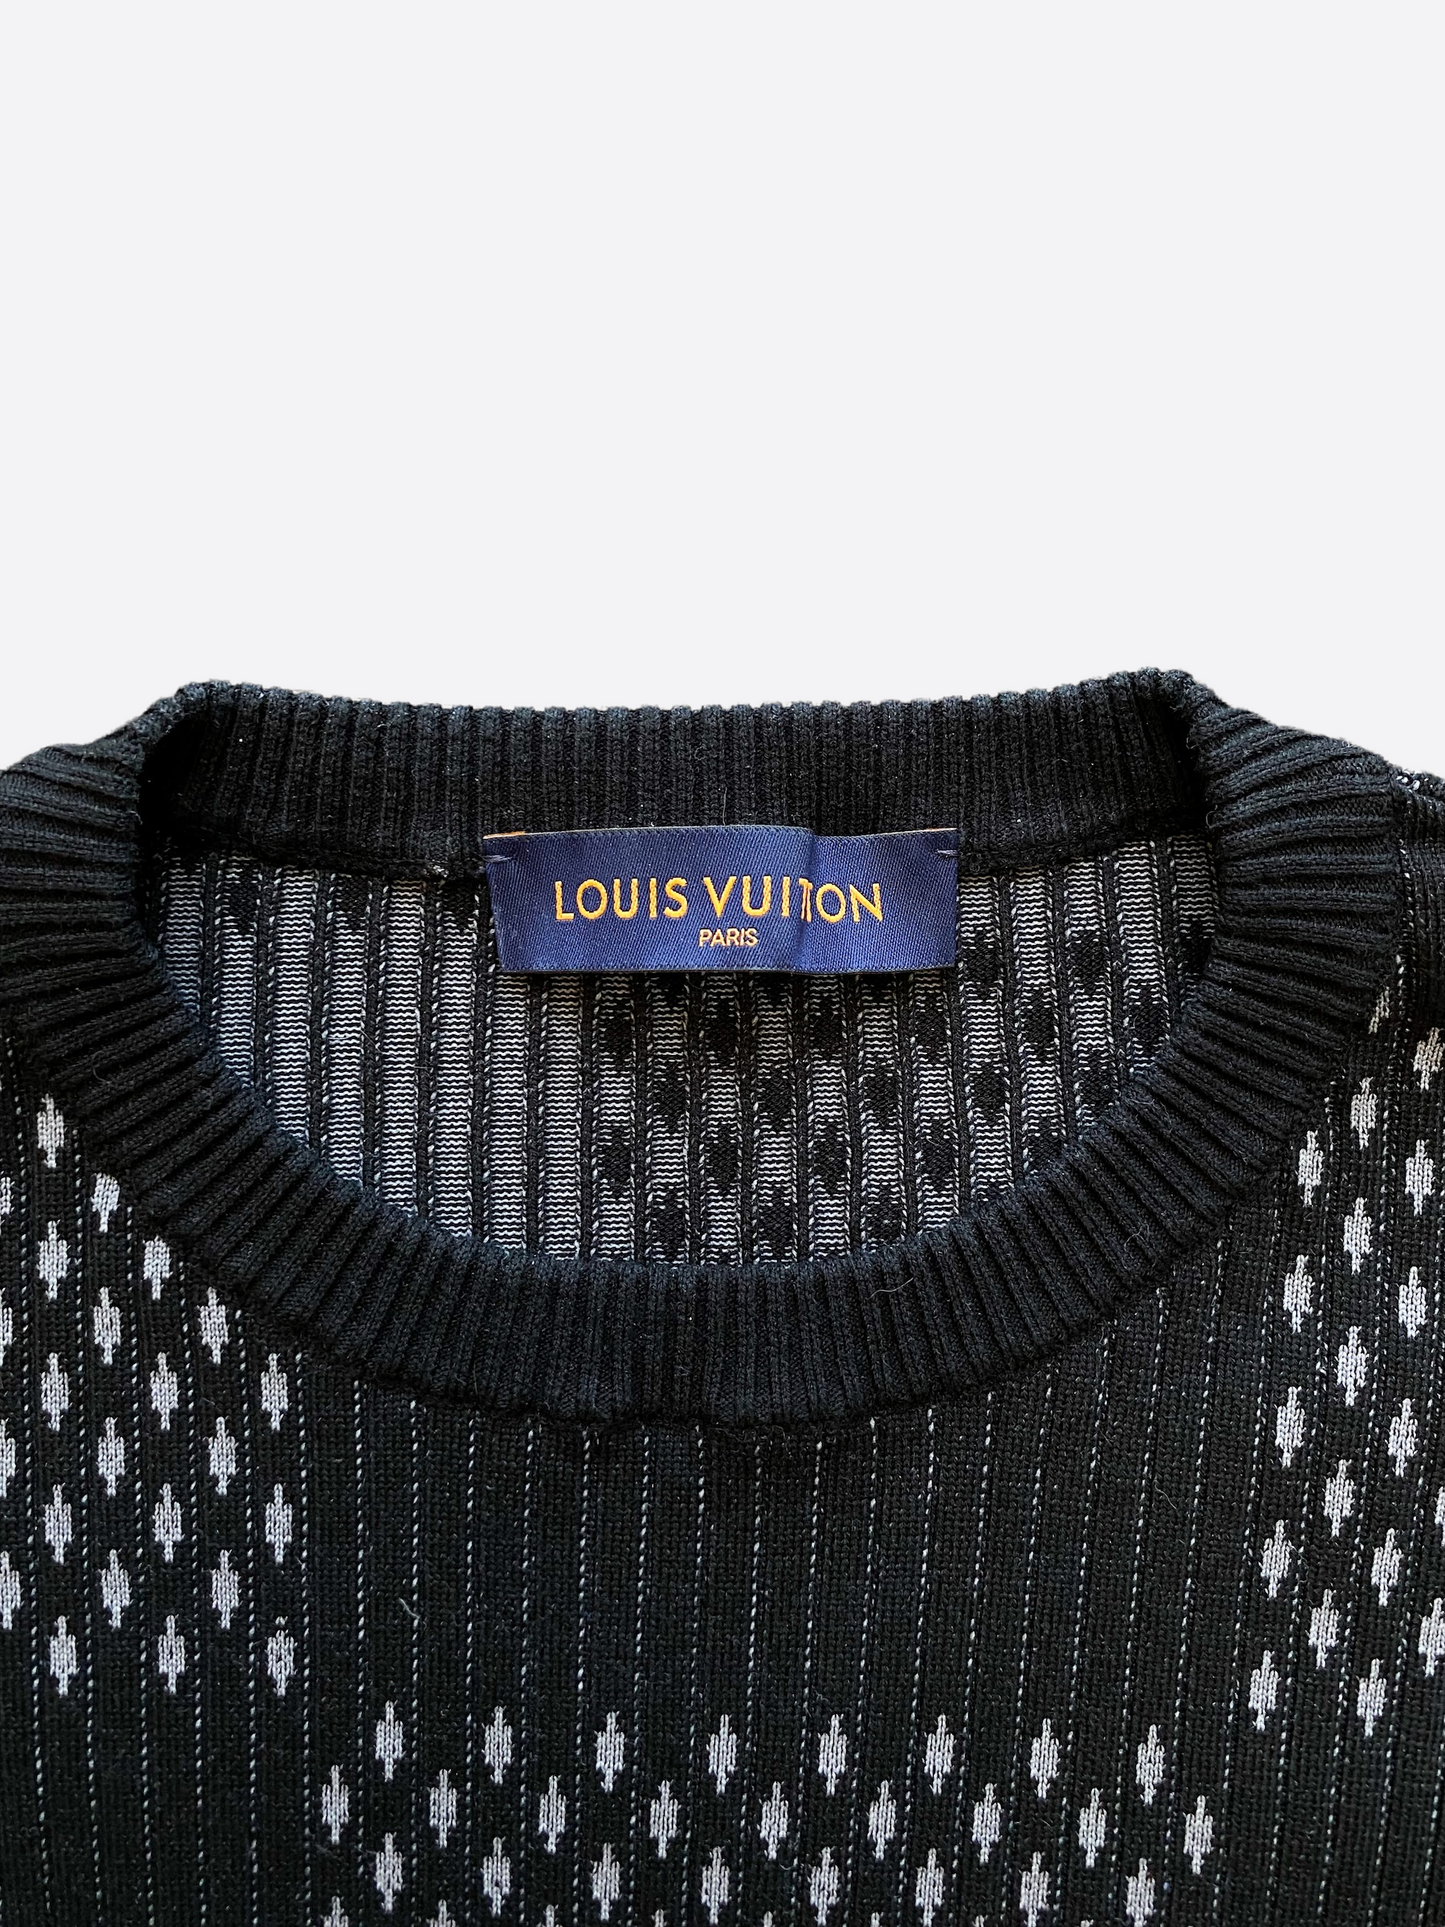 Louis Vuitton Grey Damier Patterned Knit Jumper S - ShopStyle